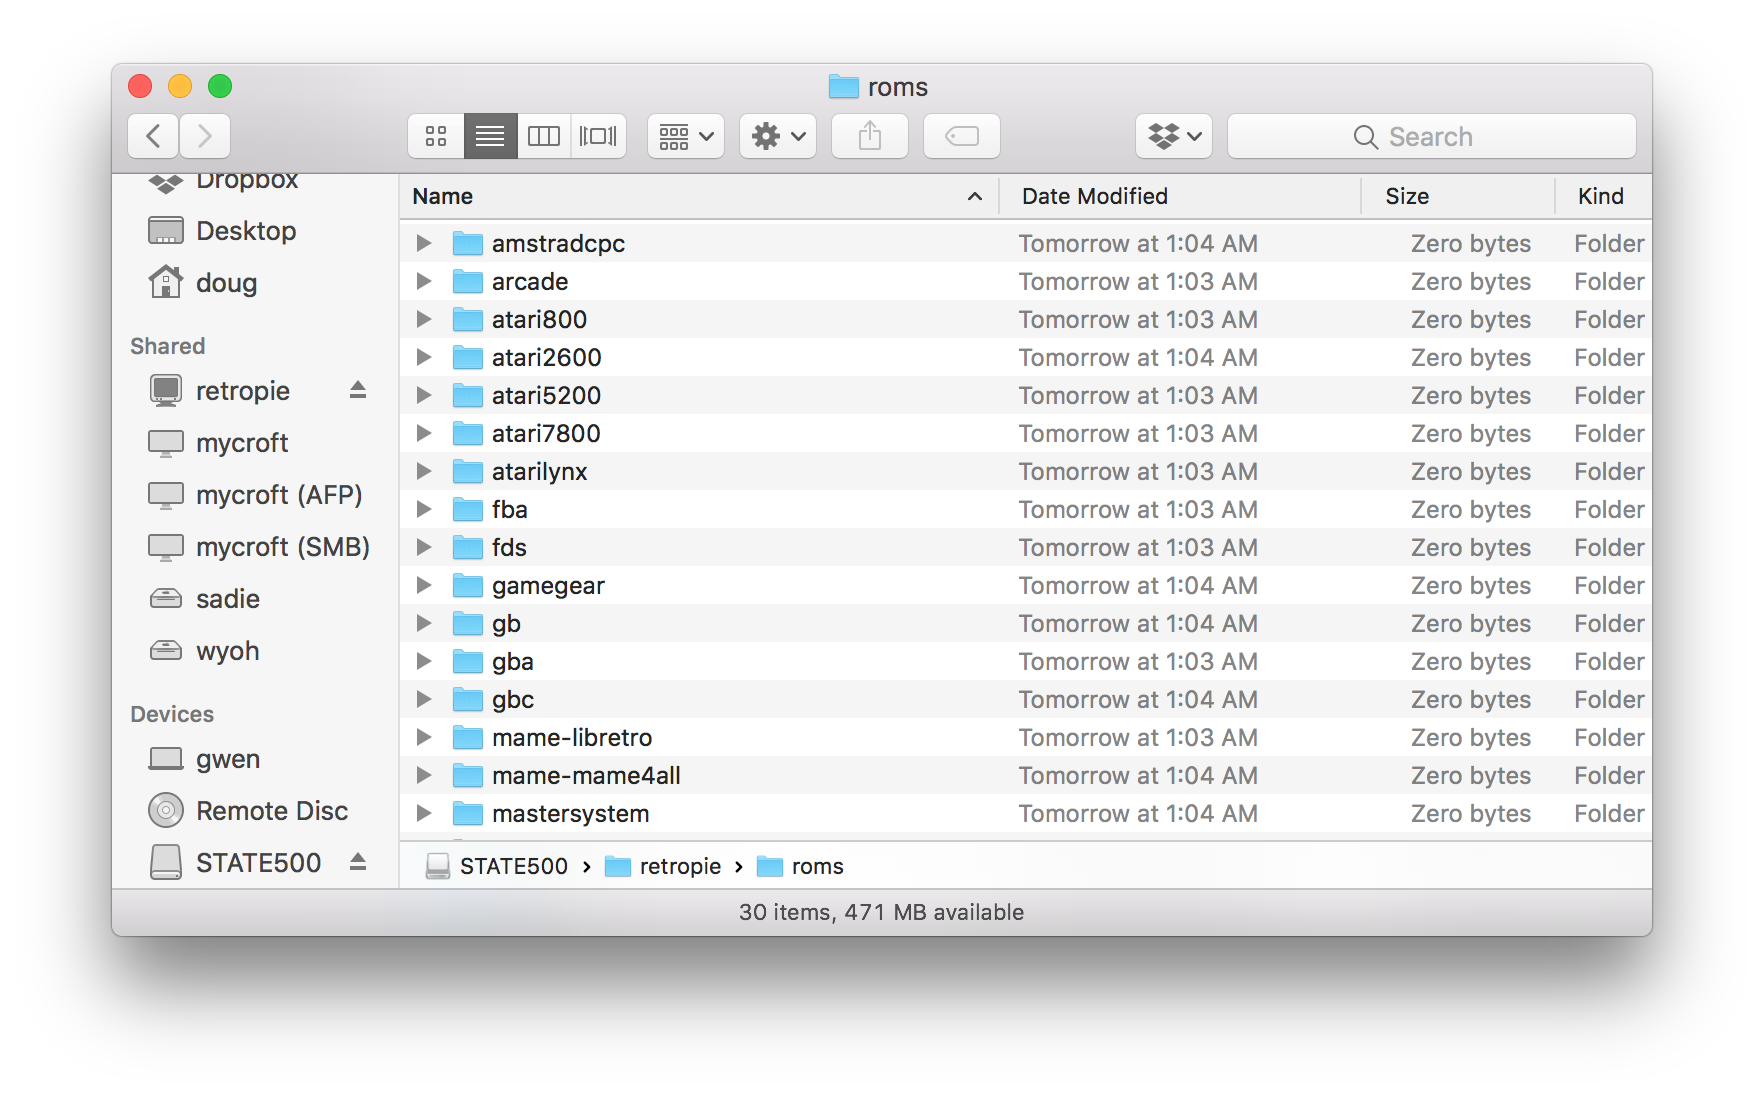 which rom folder for mac games in retropie